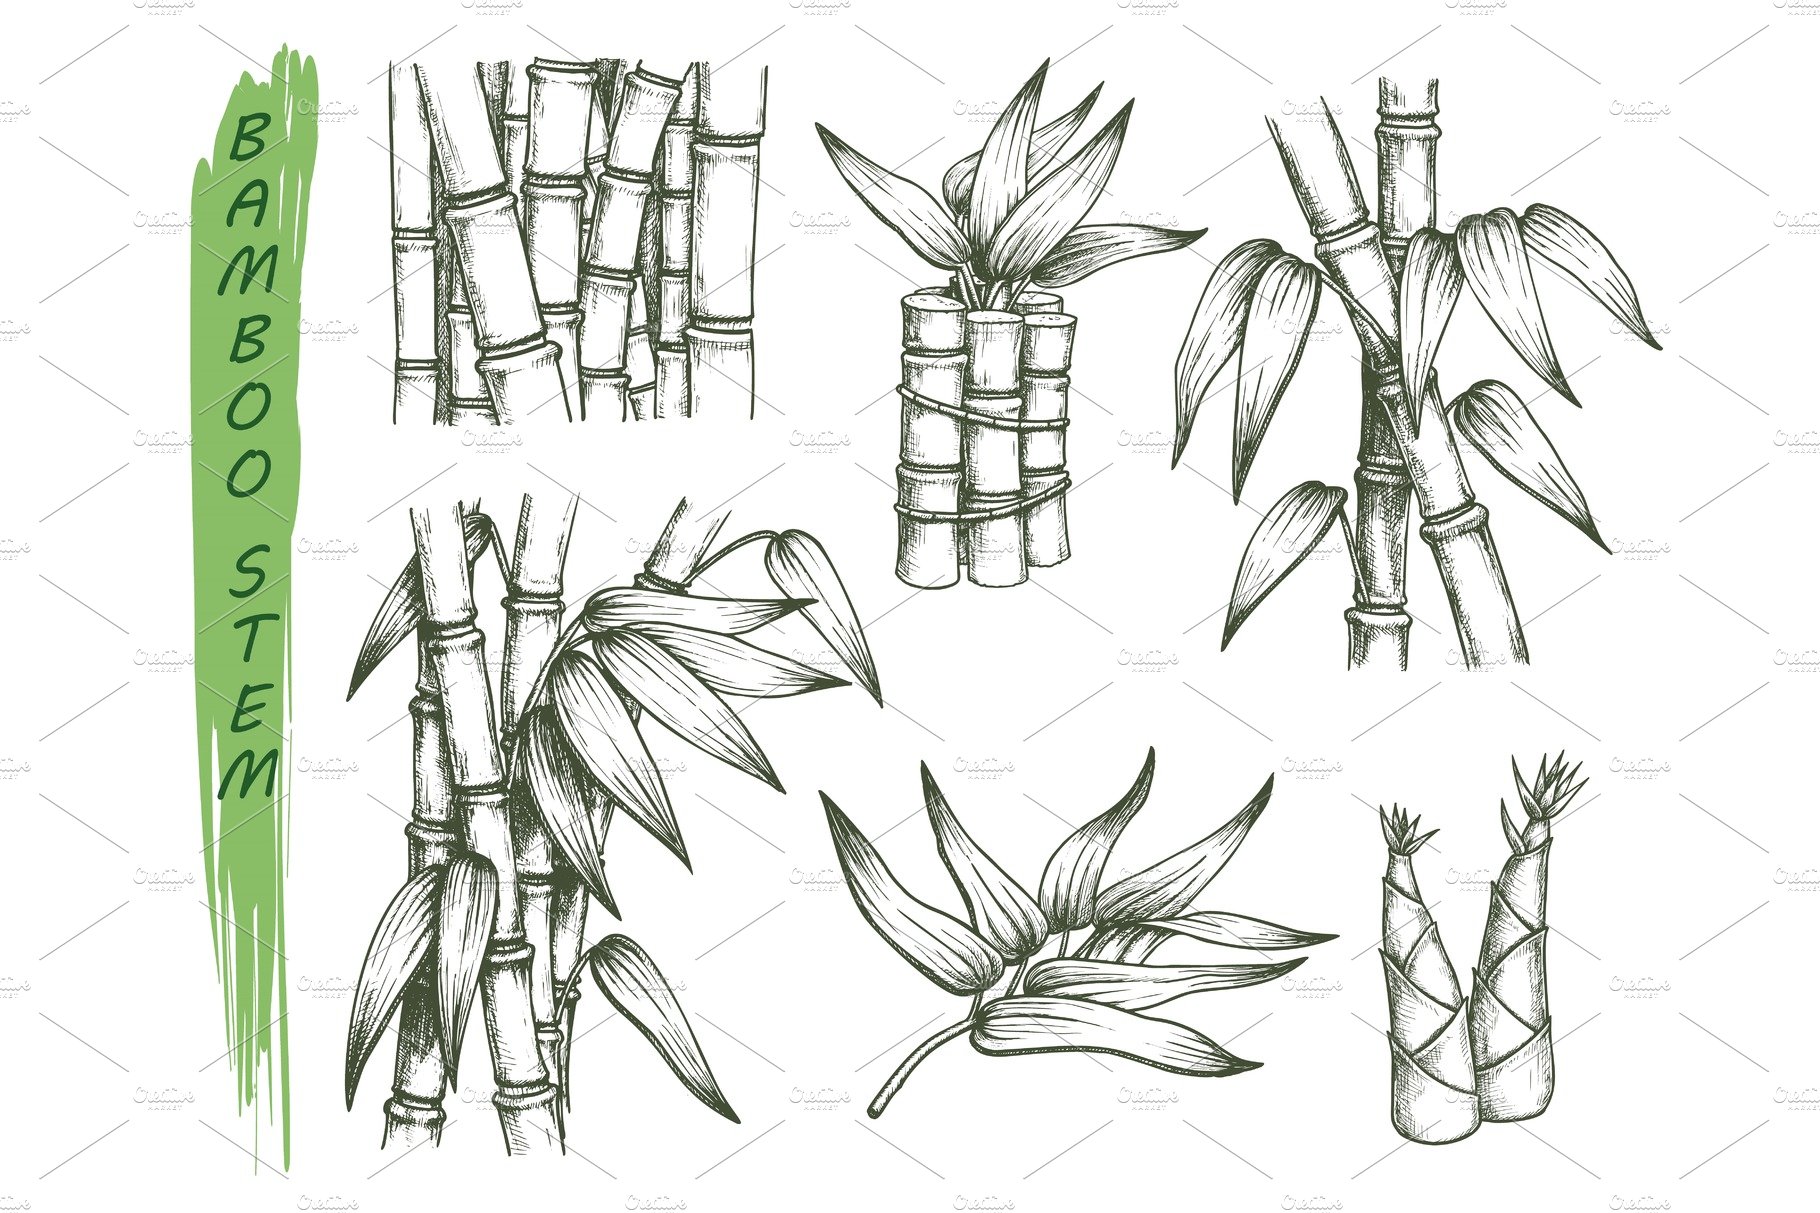 Chinese Bamboo Drawing Cliparts, Stock Vector and Royalty Free Chinese Bamboo  Drawing Illustrations